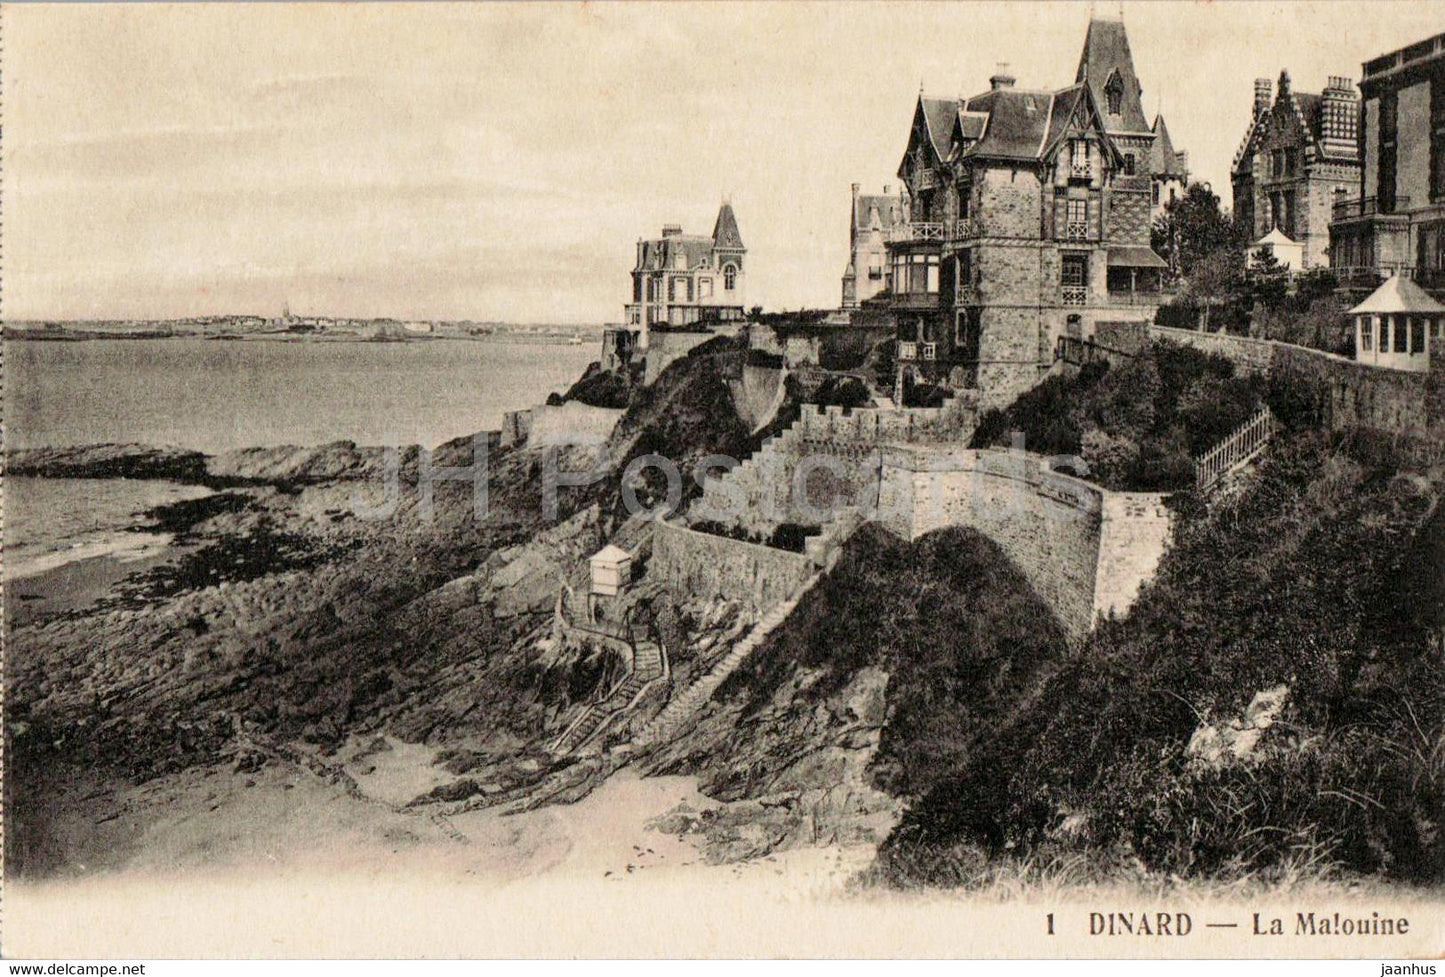 Dinard - La Malouine - 1 - old postcard - France - used - JH Postcards